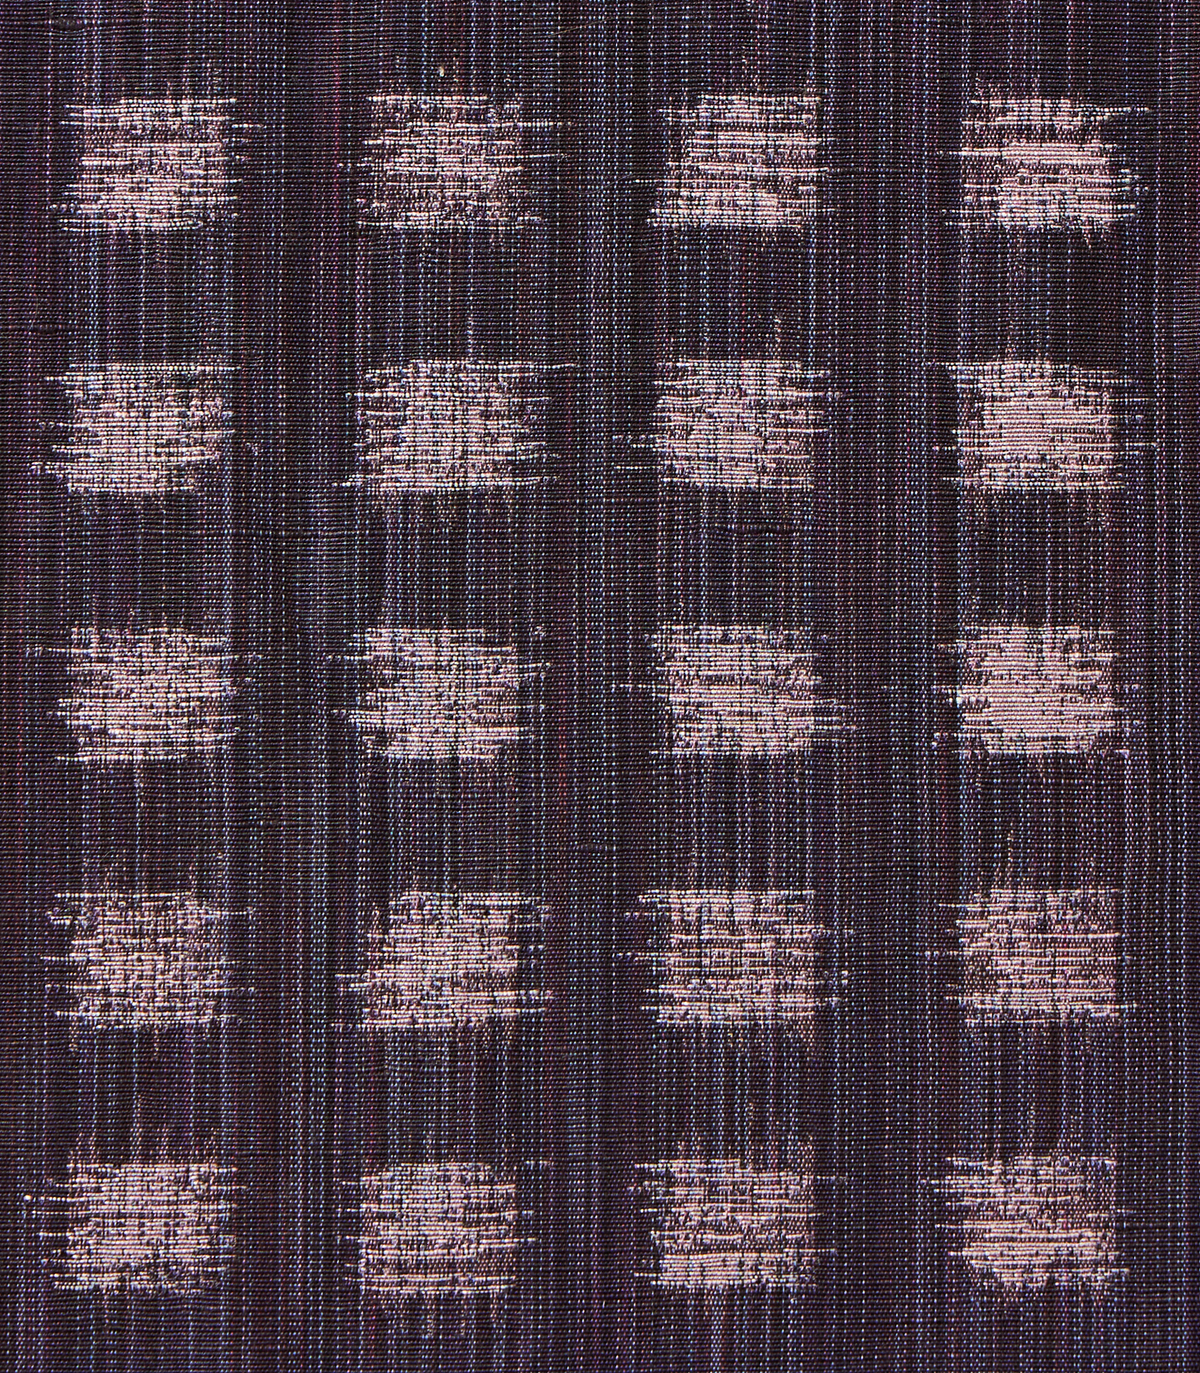 Gridded Ikat Fabric in Dark Plum